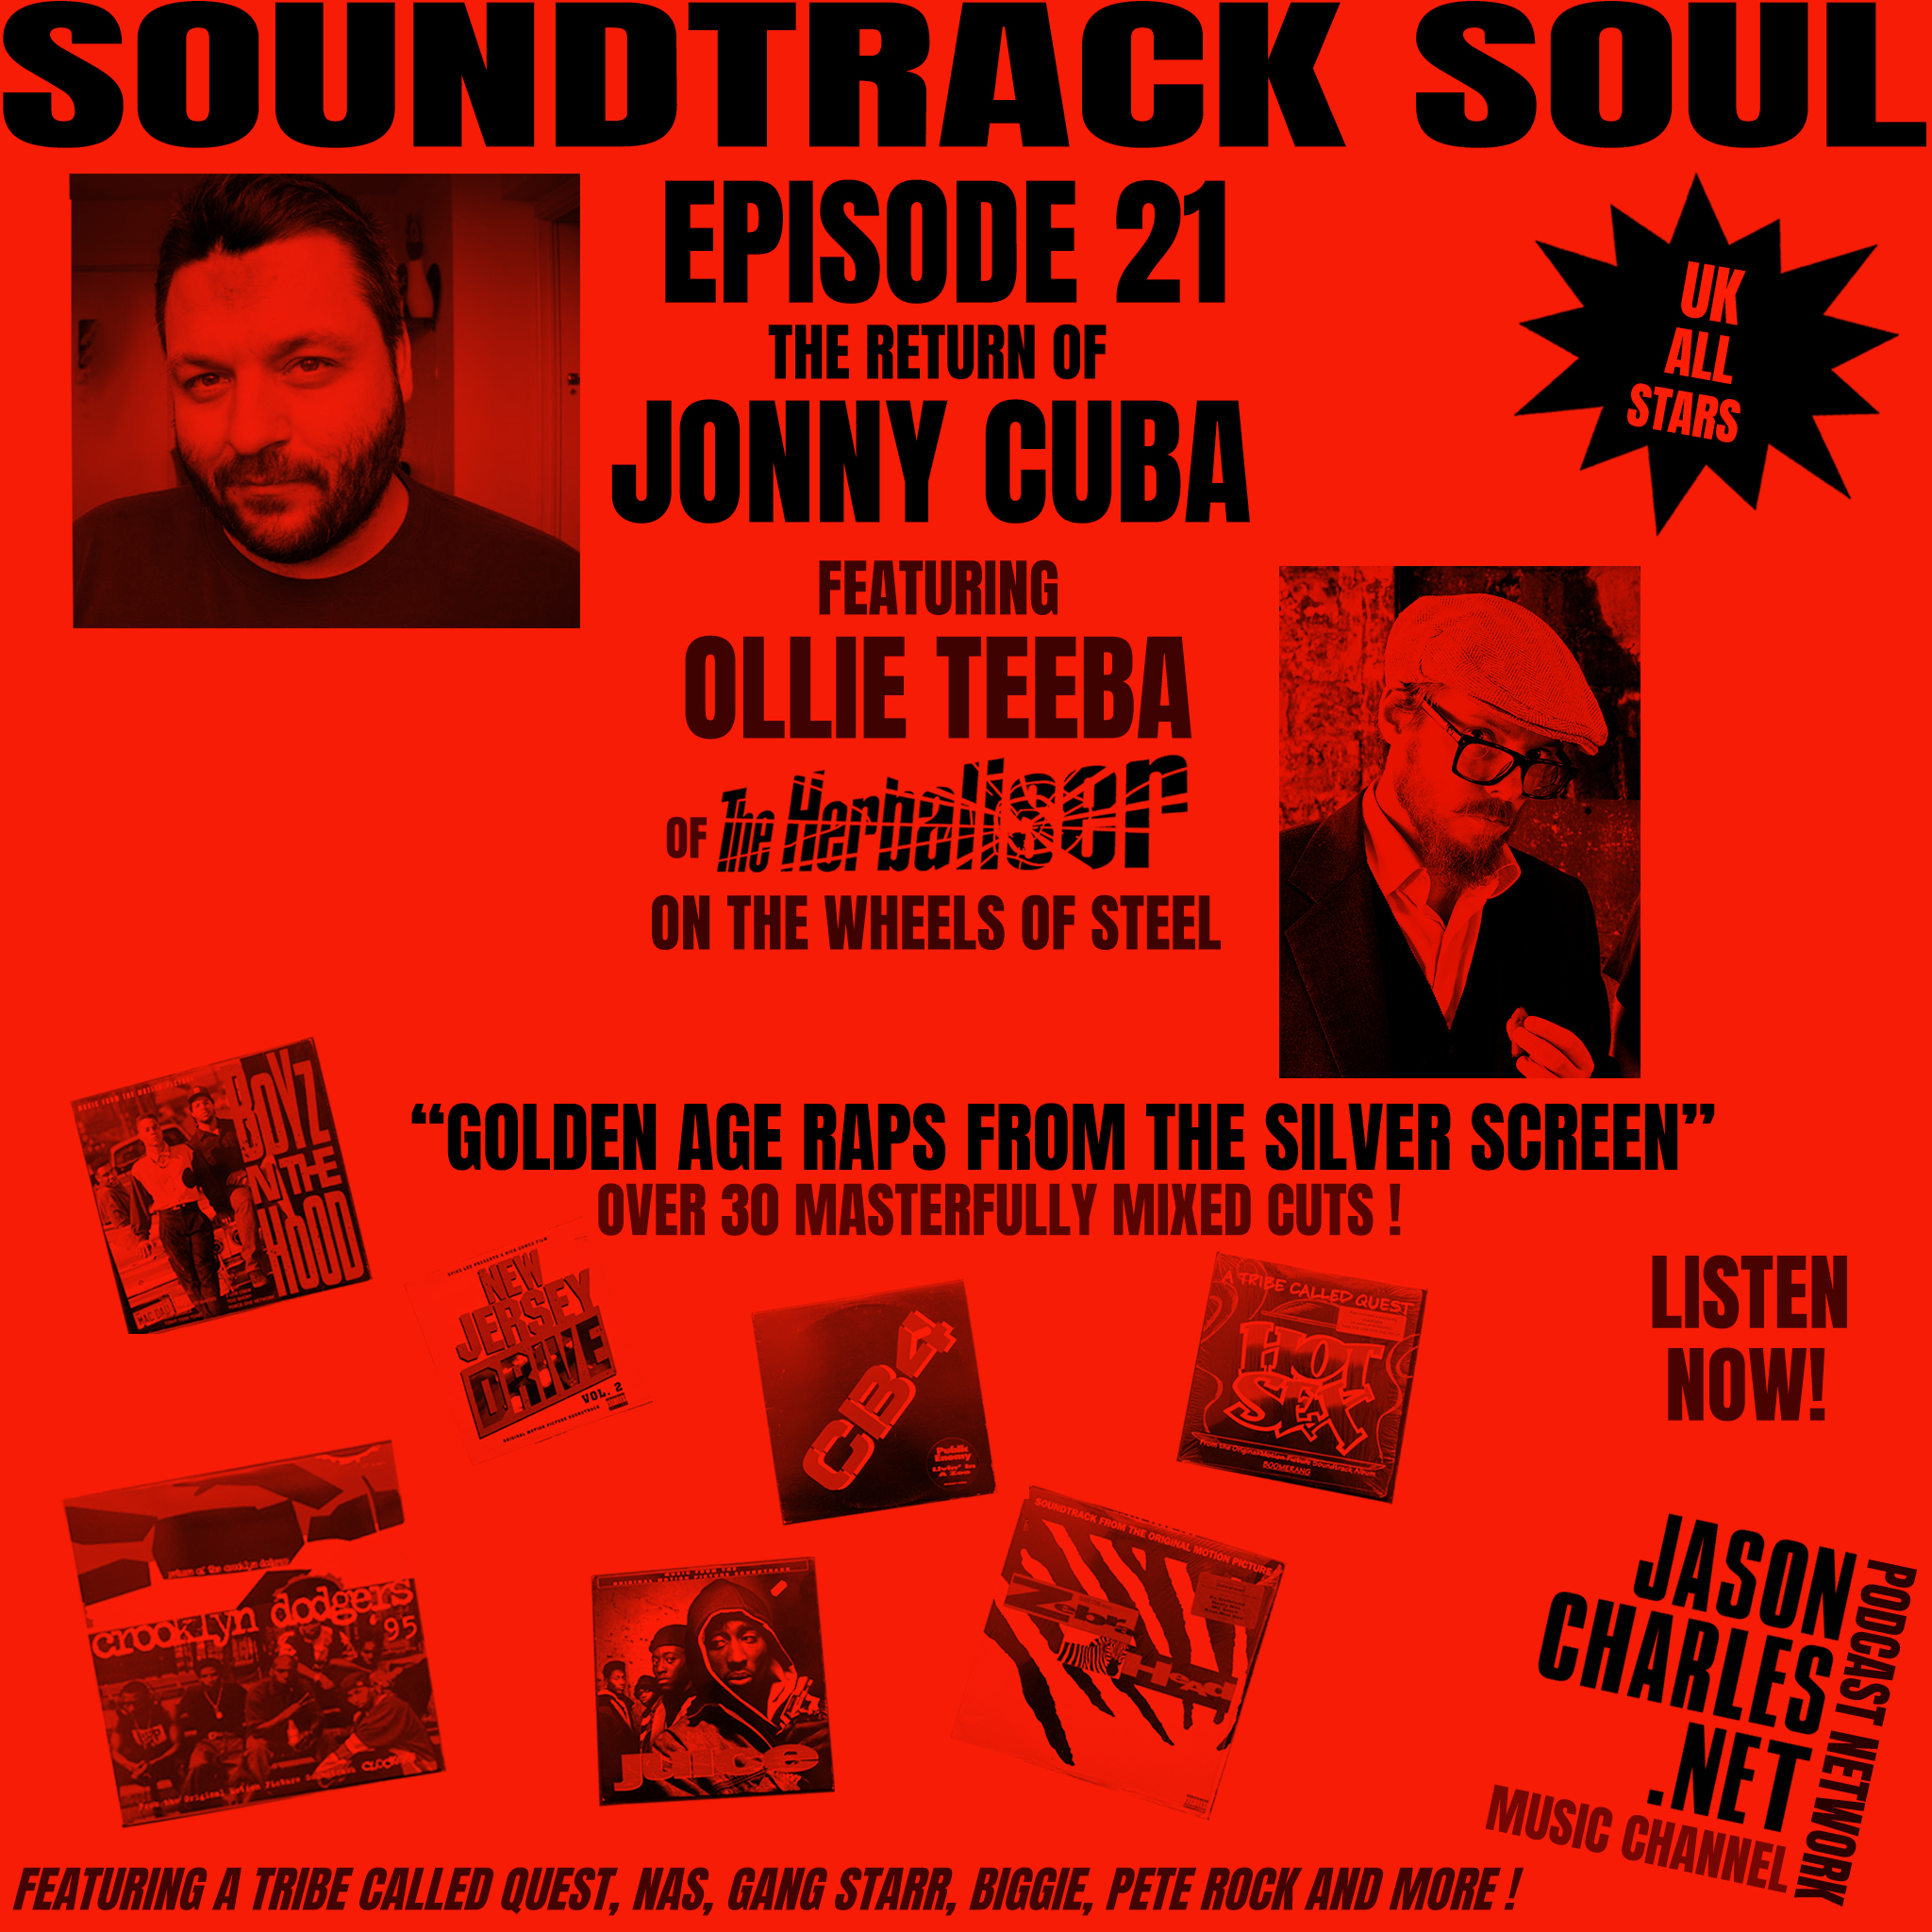 SOUNDTRACK SOUL Episode 21 The Return of JONNY CUBA featuring OLLIE TEEBA "Golden Age Raps From The Silver Screen"